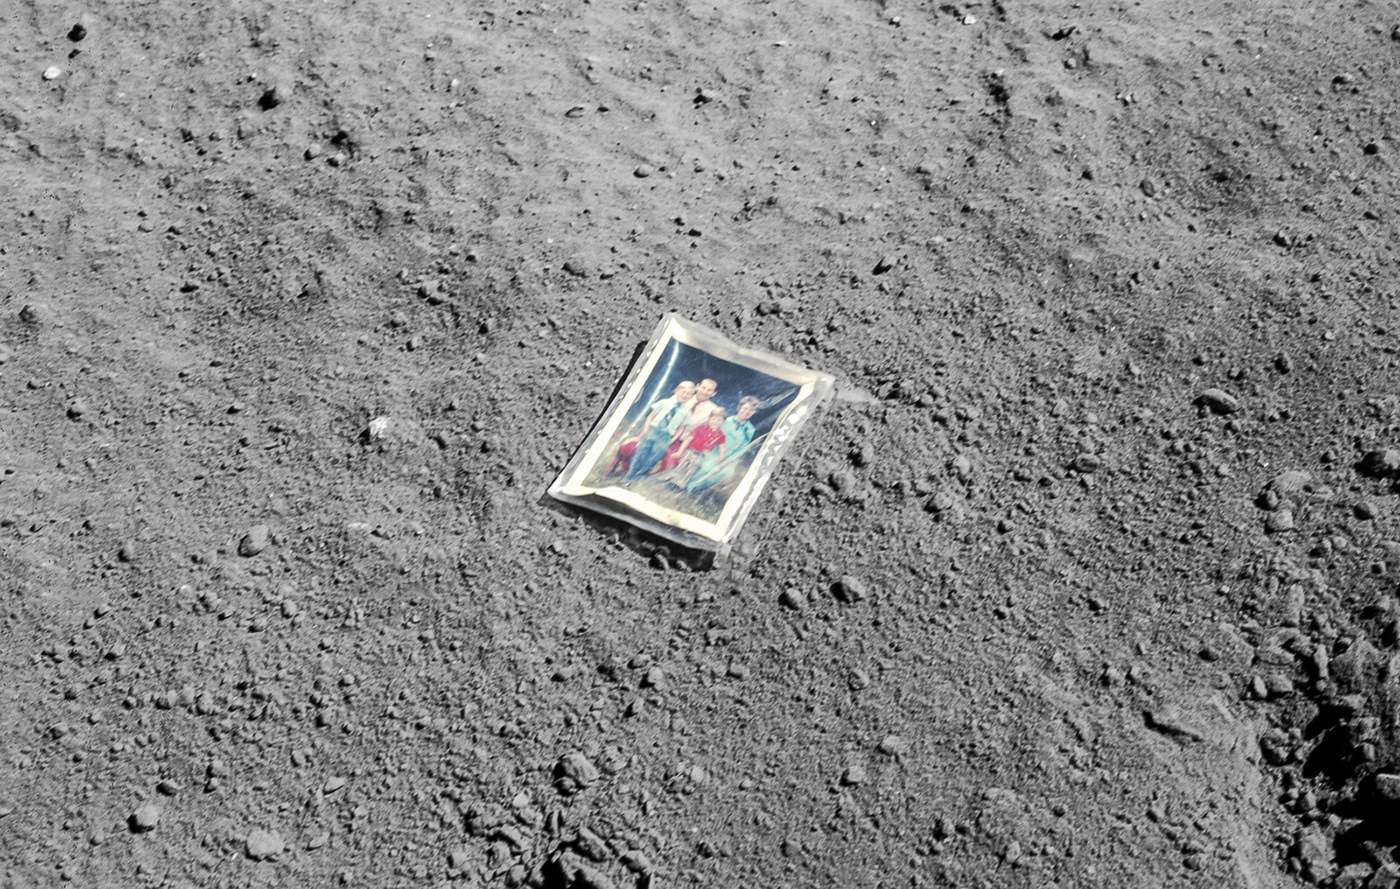 Space  moon Moon landing george clooney charlie duke astronaut apollo 11 Apollo nasa kennedy space centre